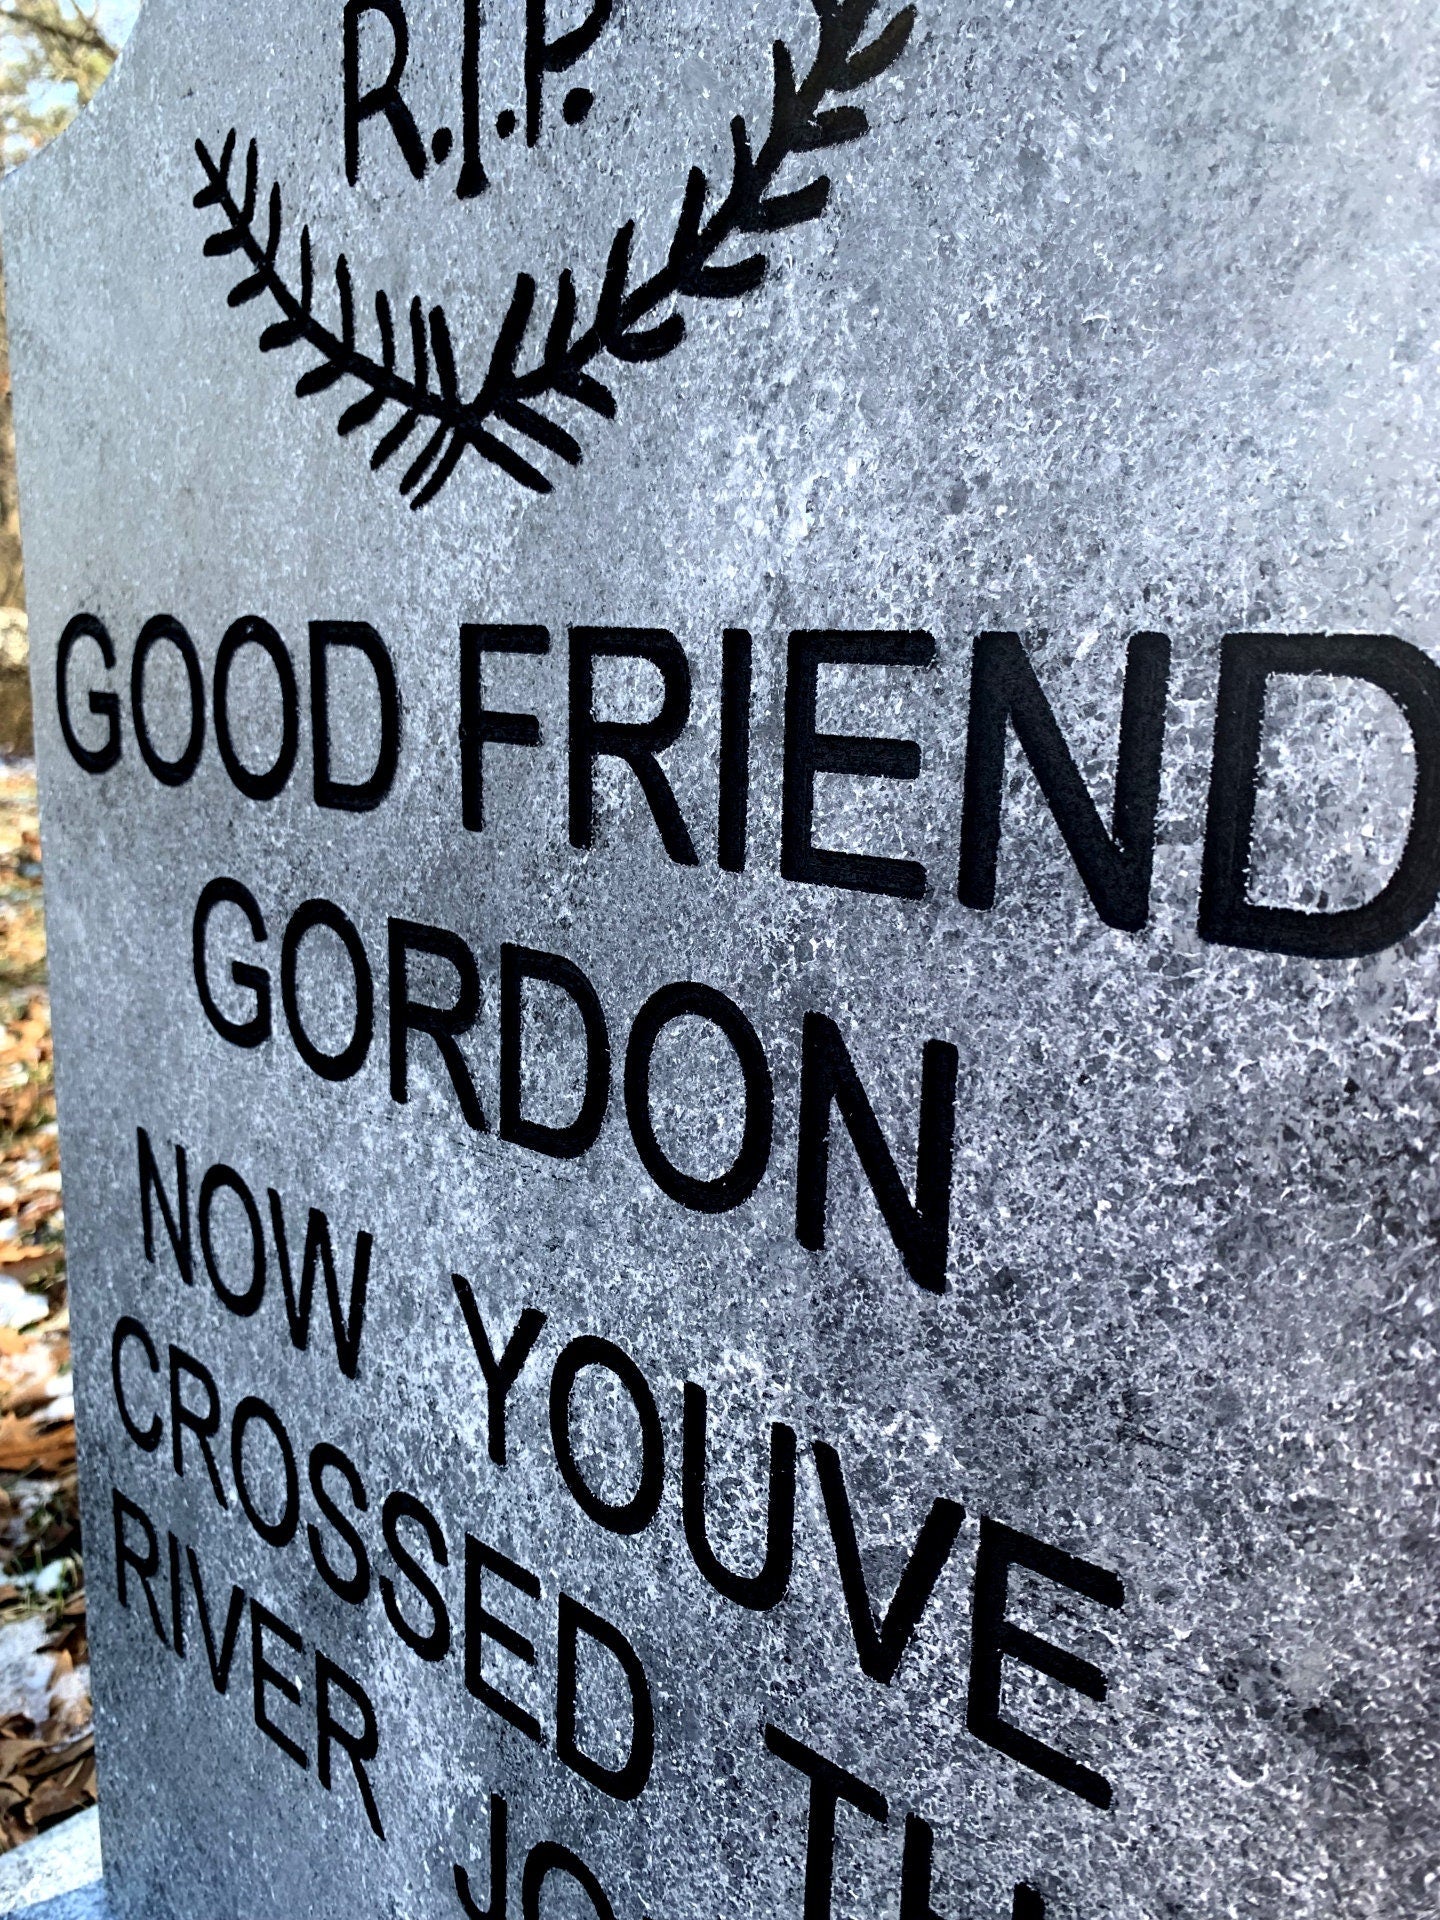 Good Friend Gordon Tombstone